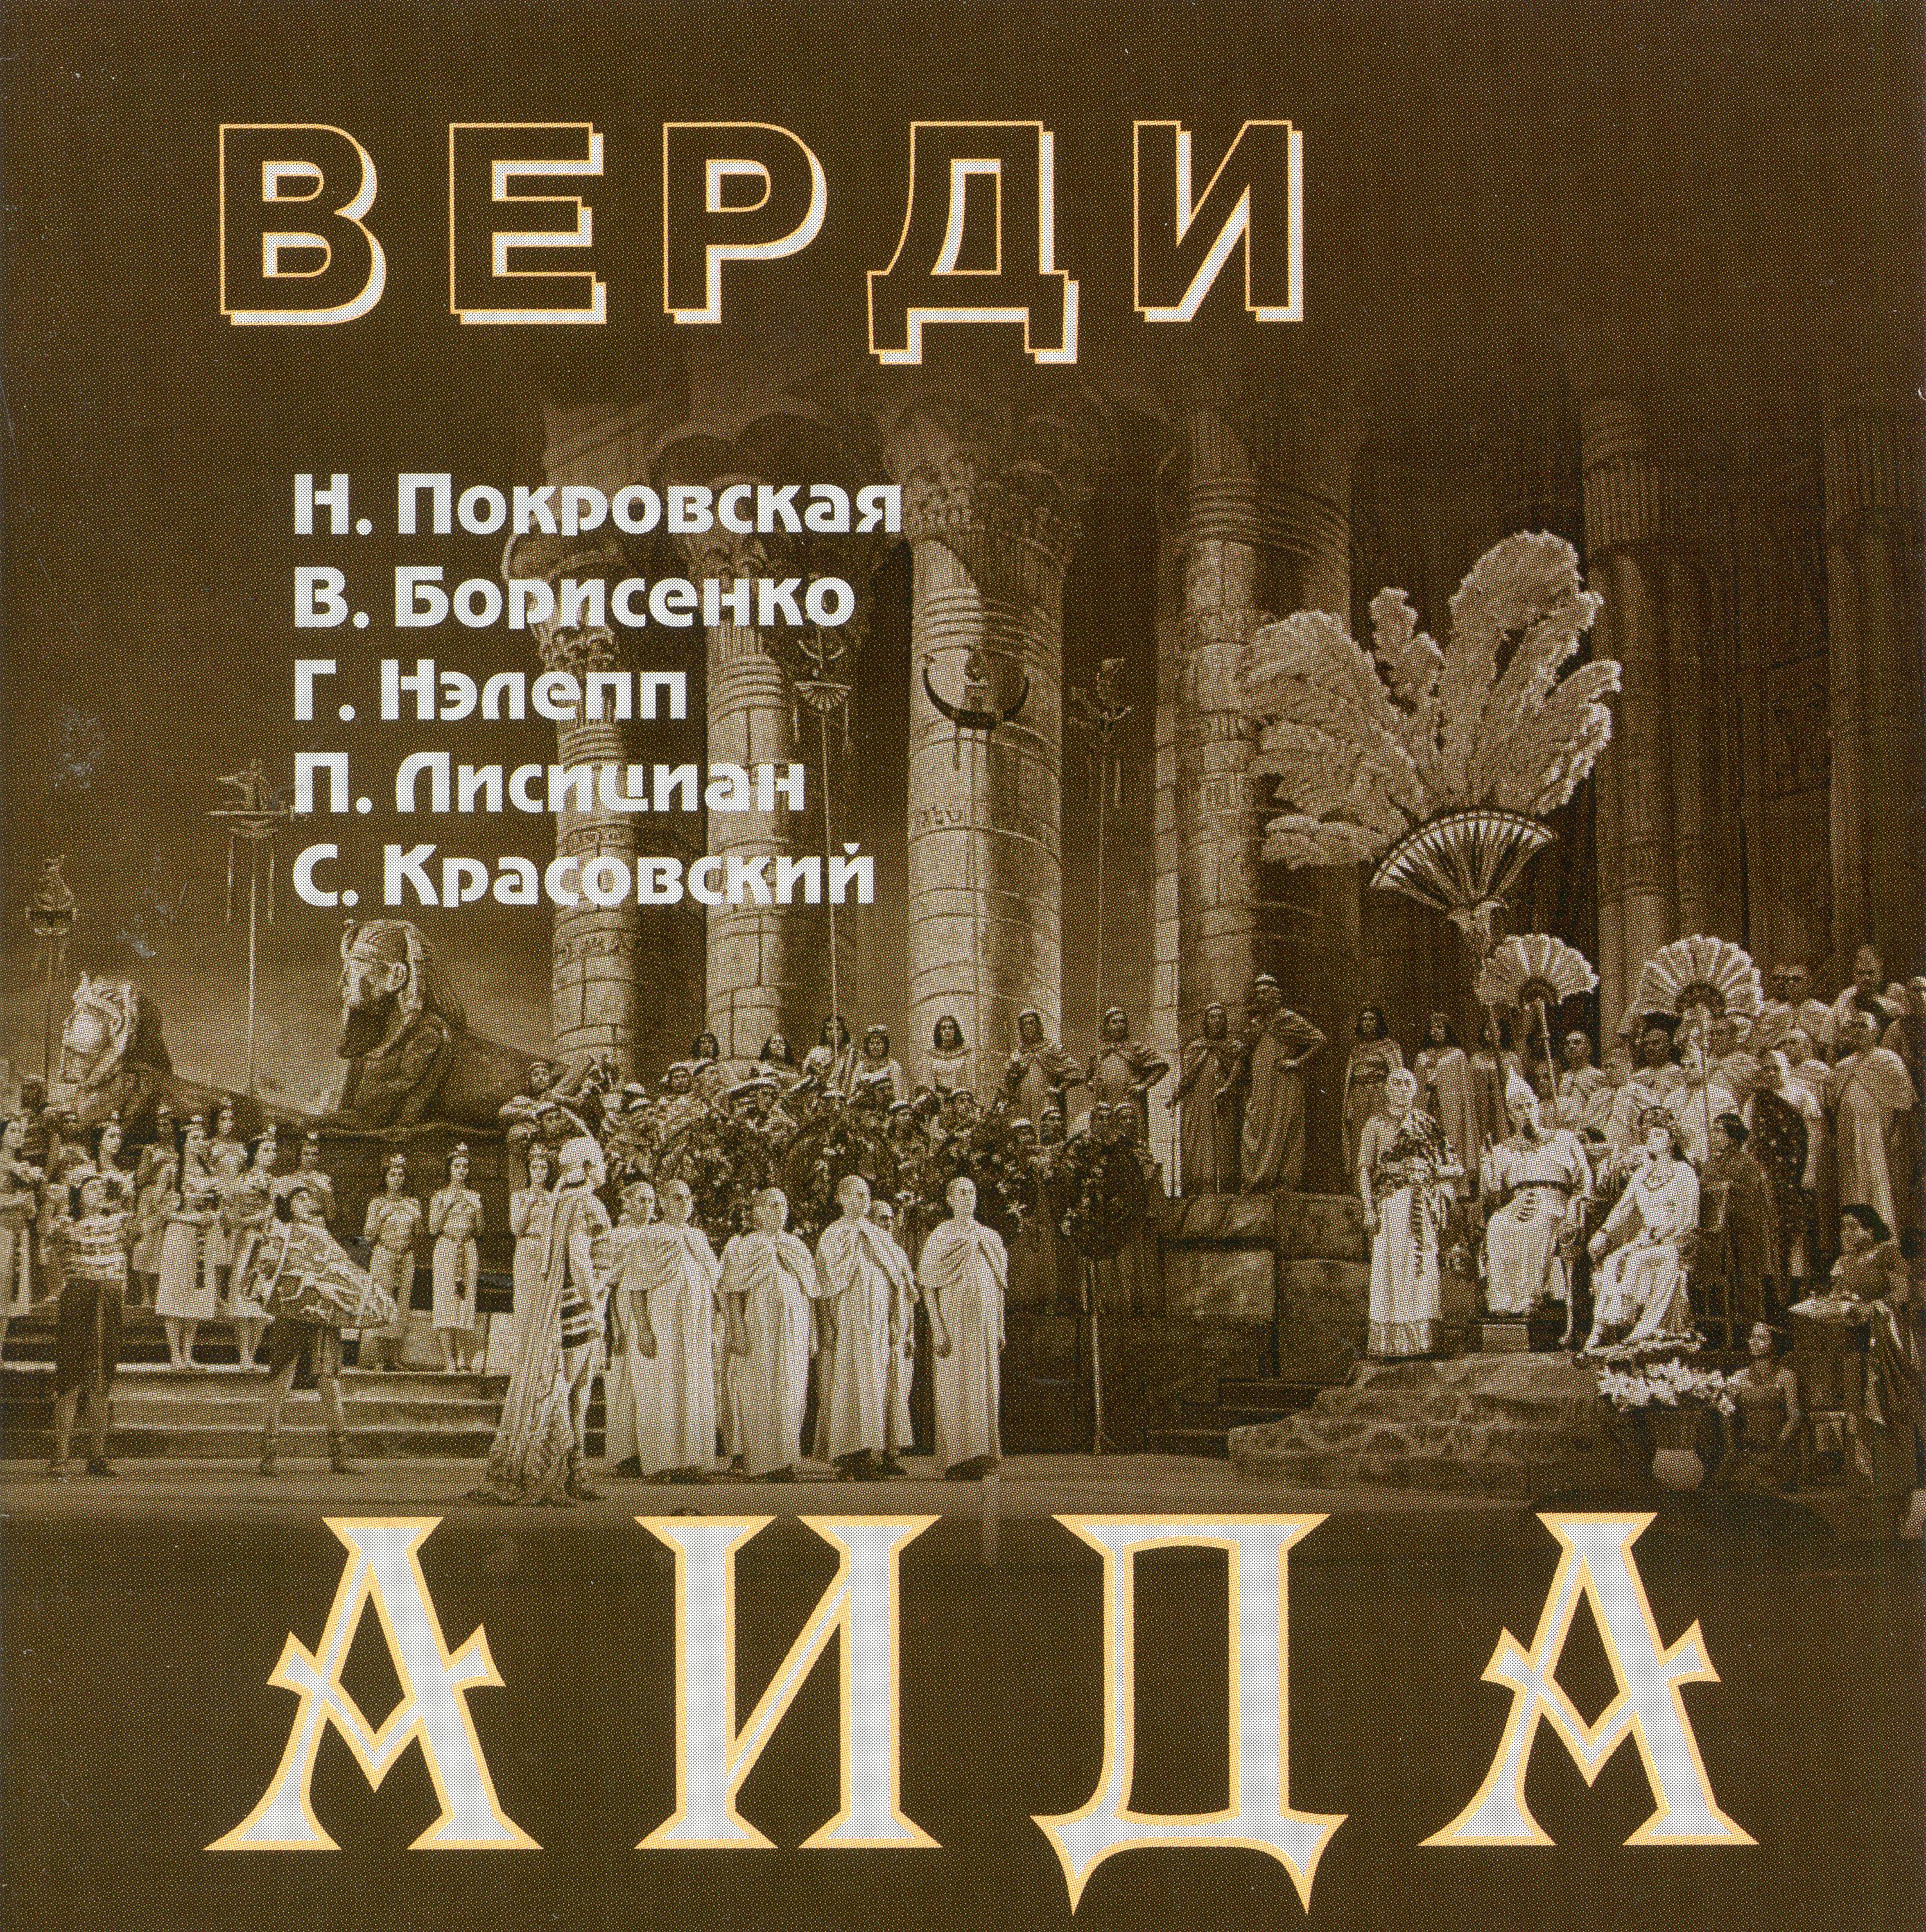 Georgi Nelepp - Aida (Excerpts Sung in Russian):Se quel guerriero io fossi! - Celeste Aida, forma divina [Live]